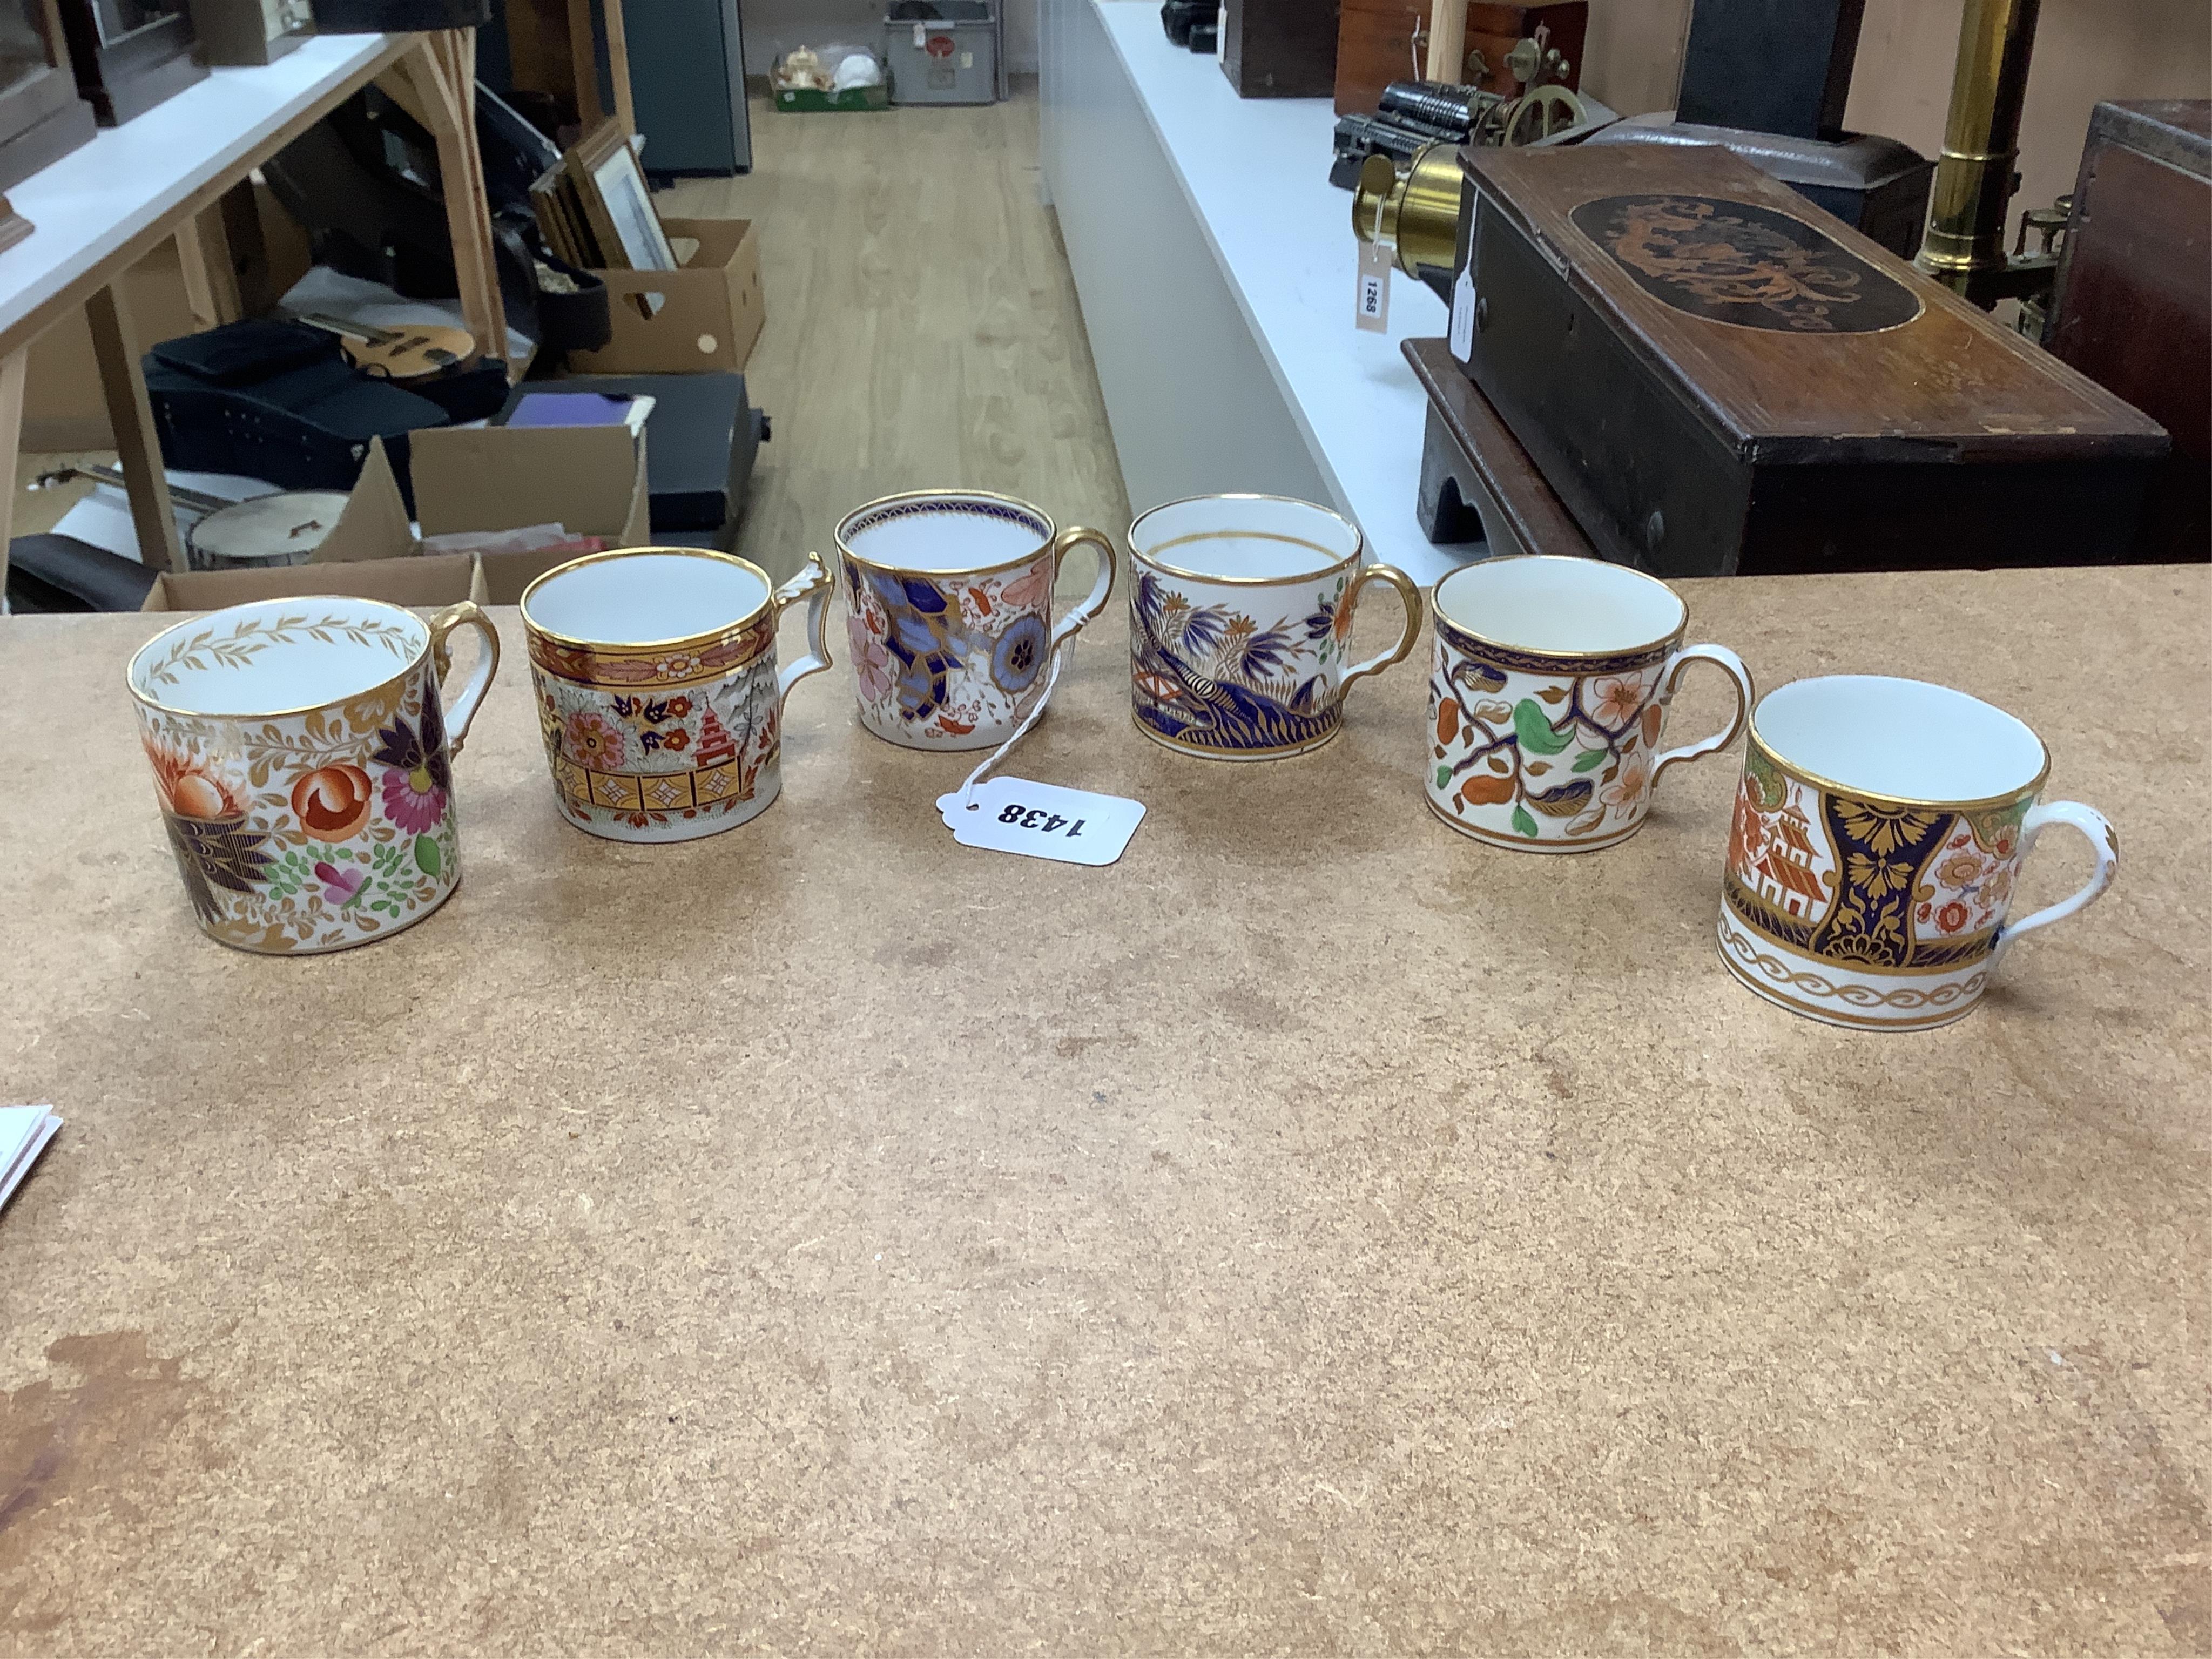 Twelve 1800-1820 English Imari patterned coffee cans